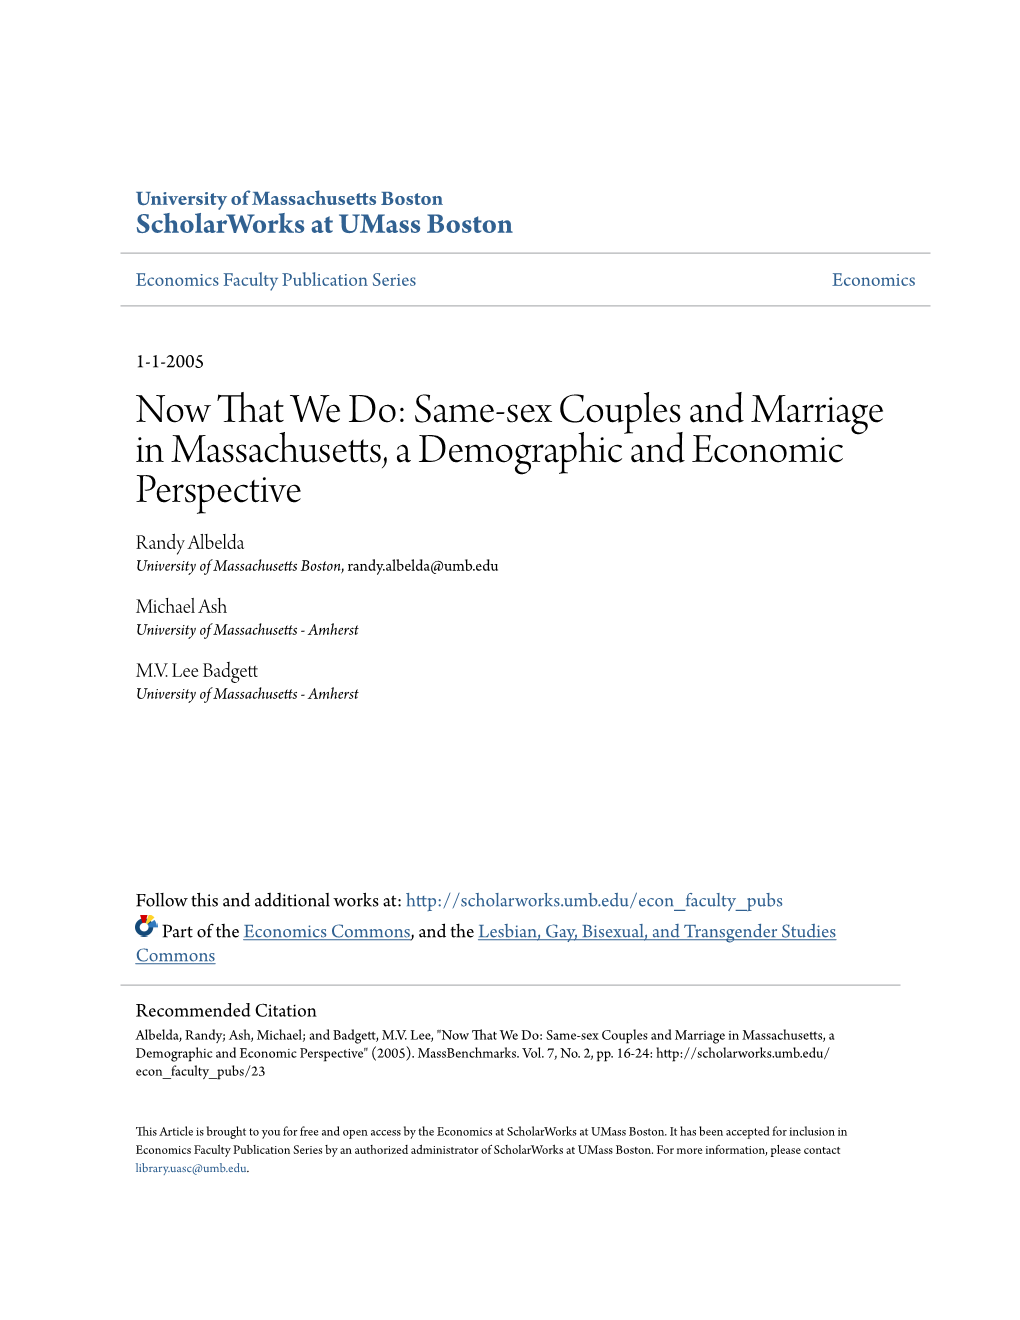 Same-Sex Couples and Marriage in Massachusetts, a Demographic and Economic Perspective Randy Albelda University of Massachusetts Boston, Randy.Albelda@Umb.Edu